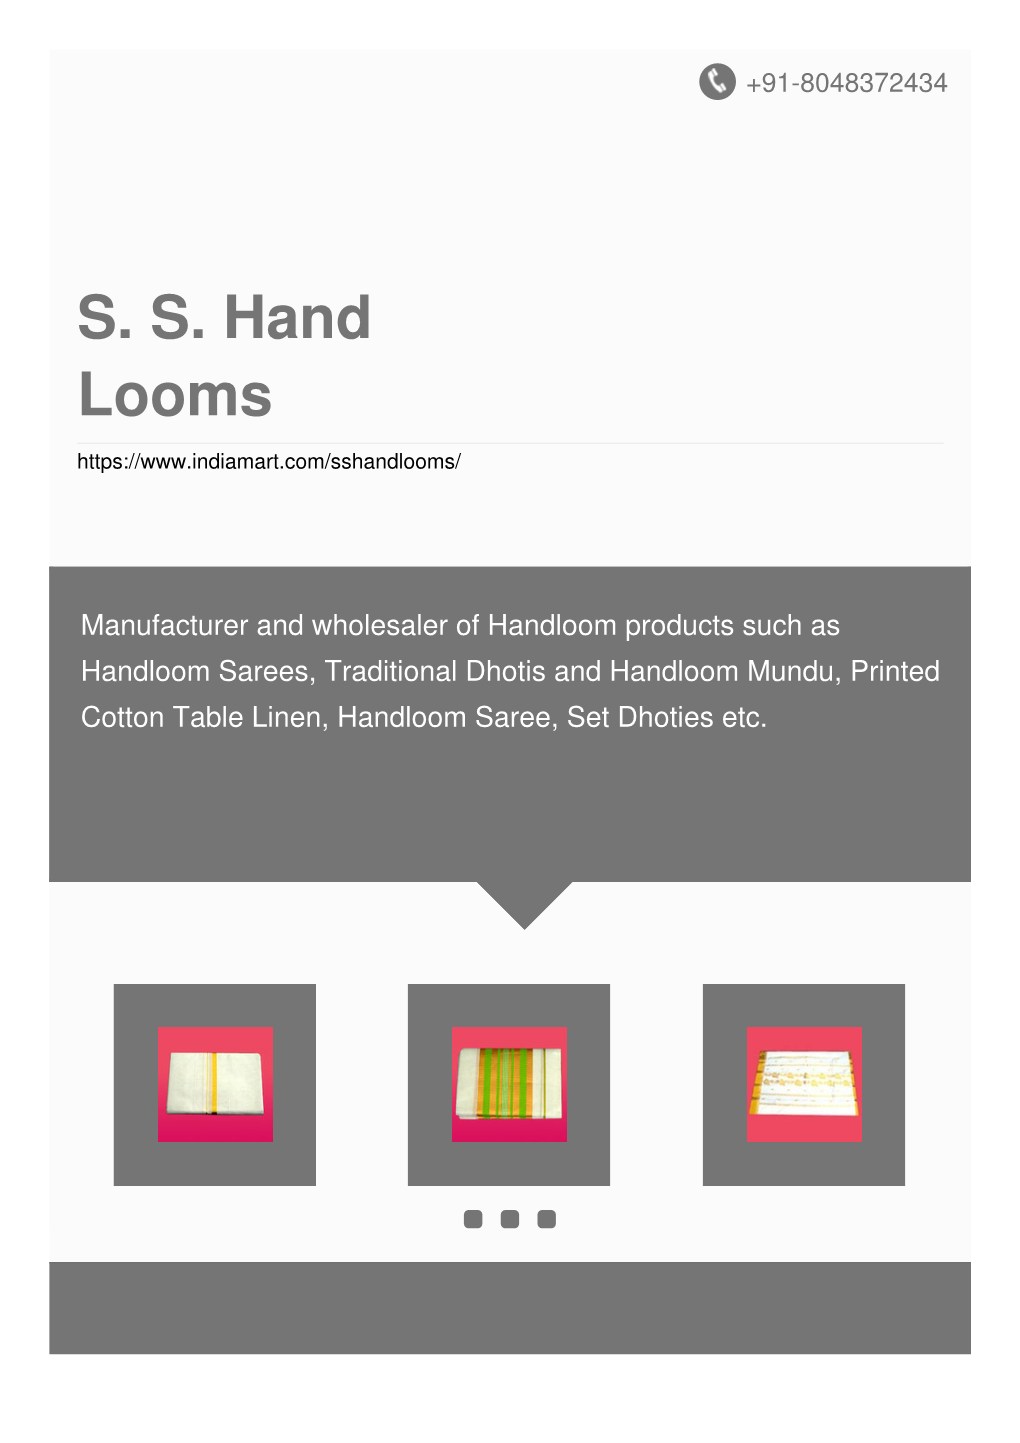 S. S. Hand Looms